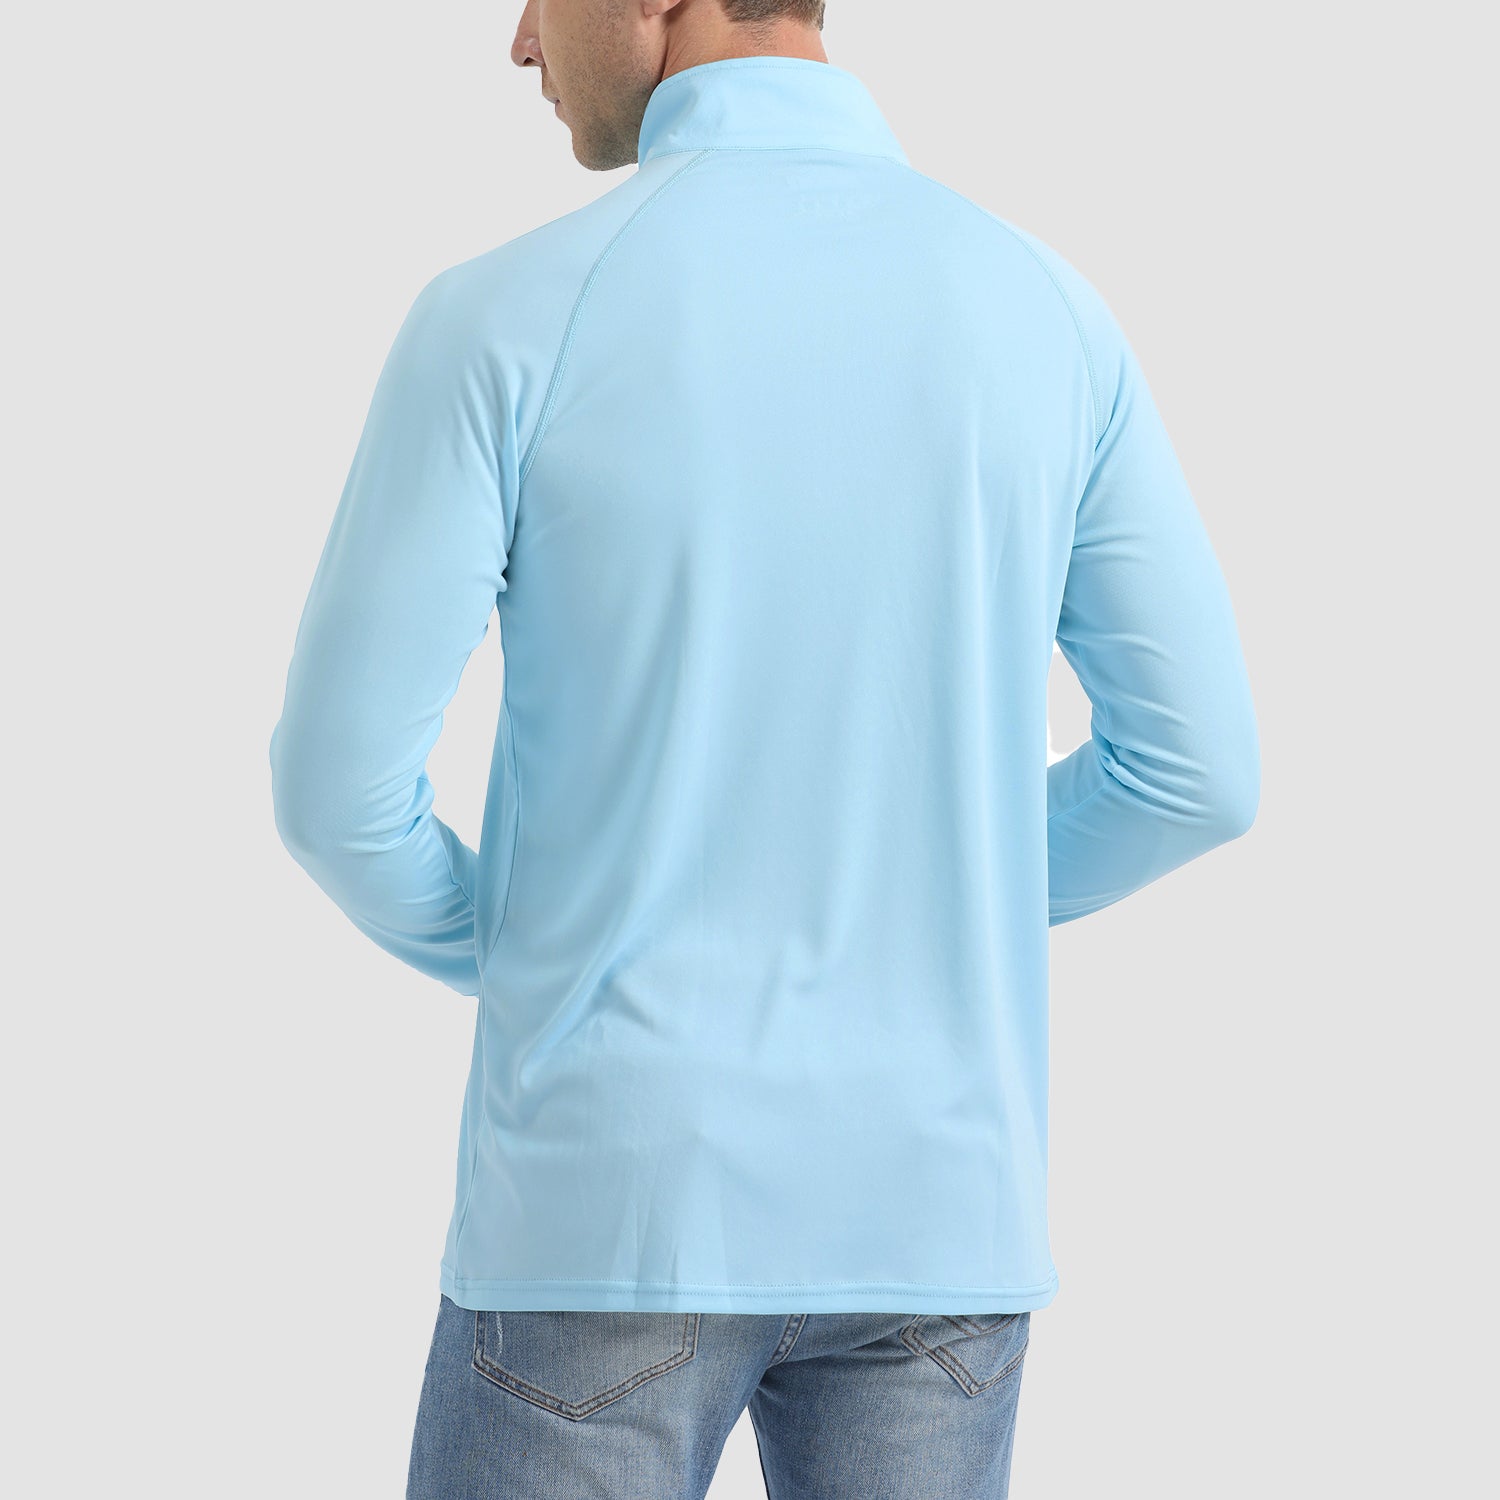 Men's Long Sleeve Shirt UPF 50 Quick Dry for Outdoor Sports, Dark Grey / M